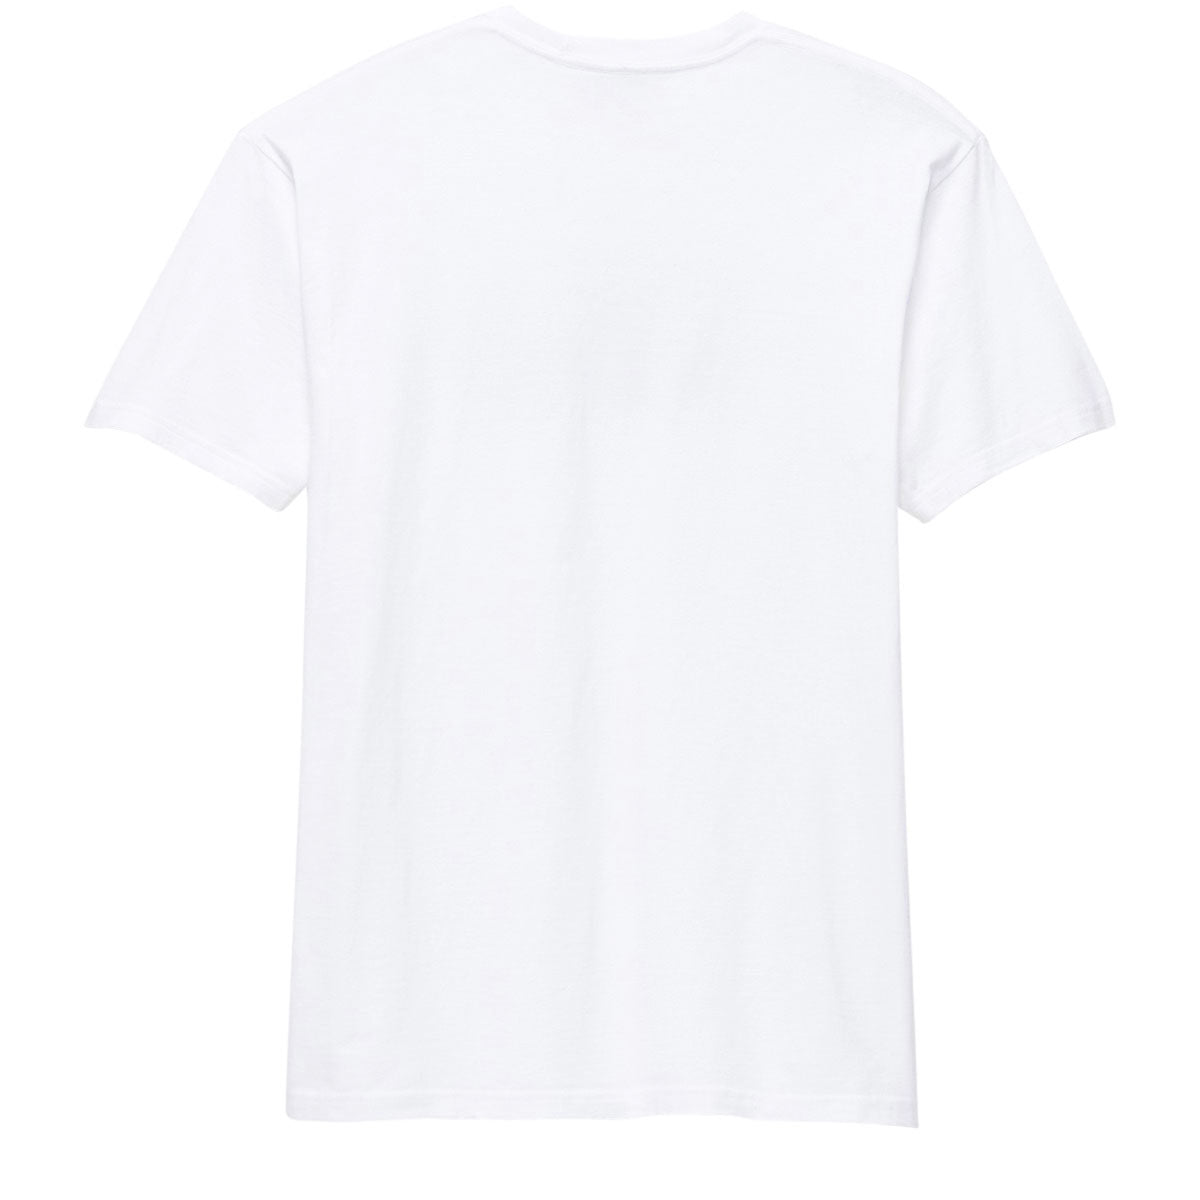 Vans Nick Michel T-Shirt - White image 4